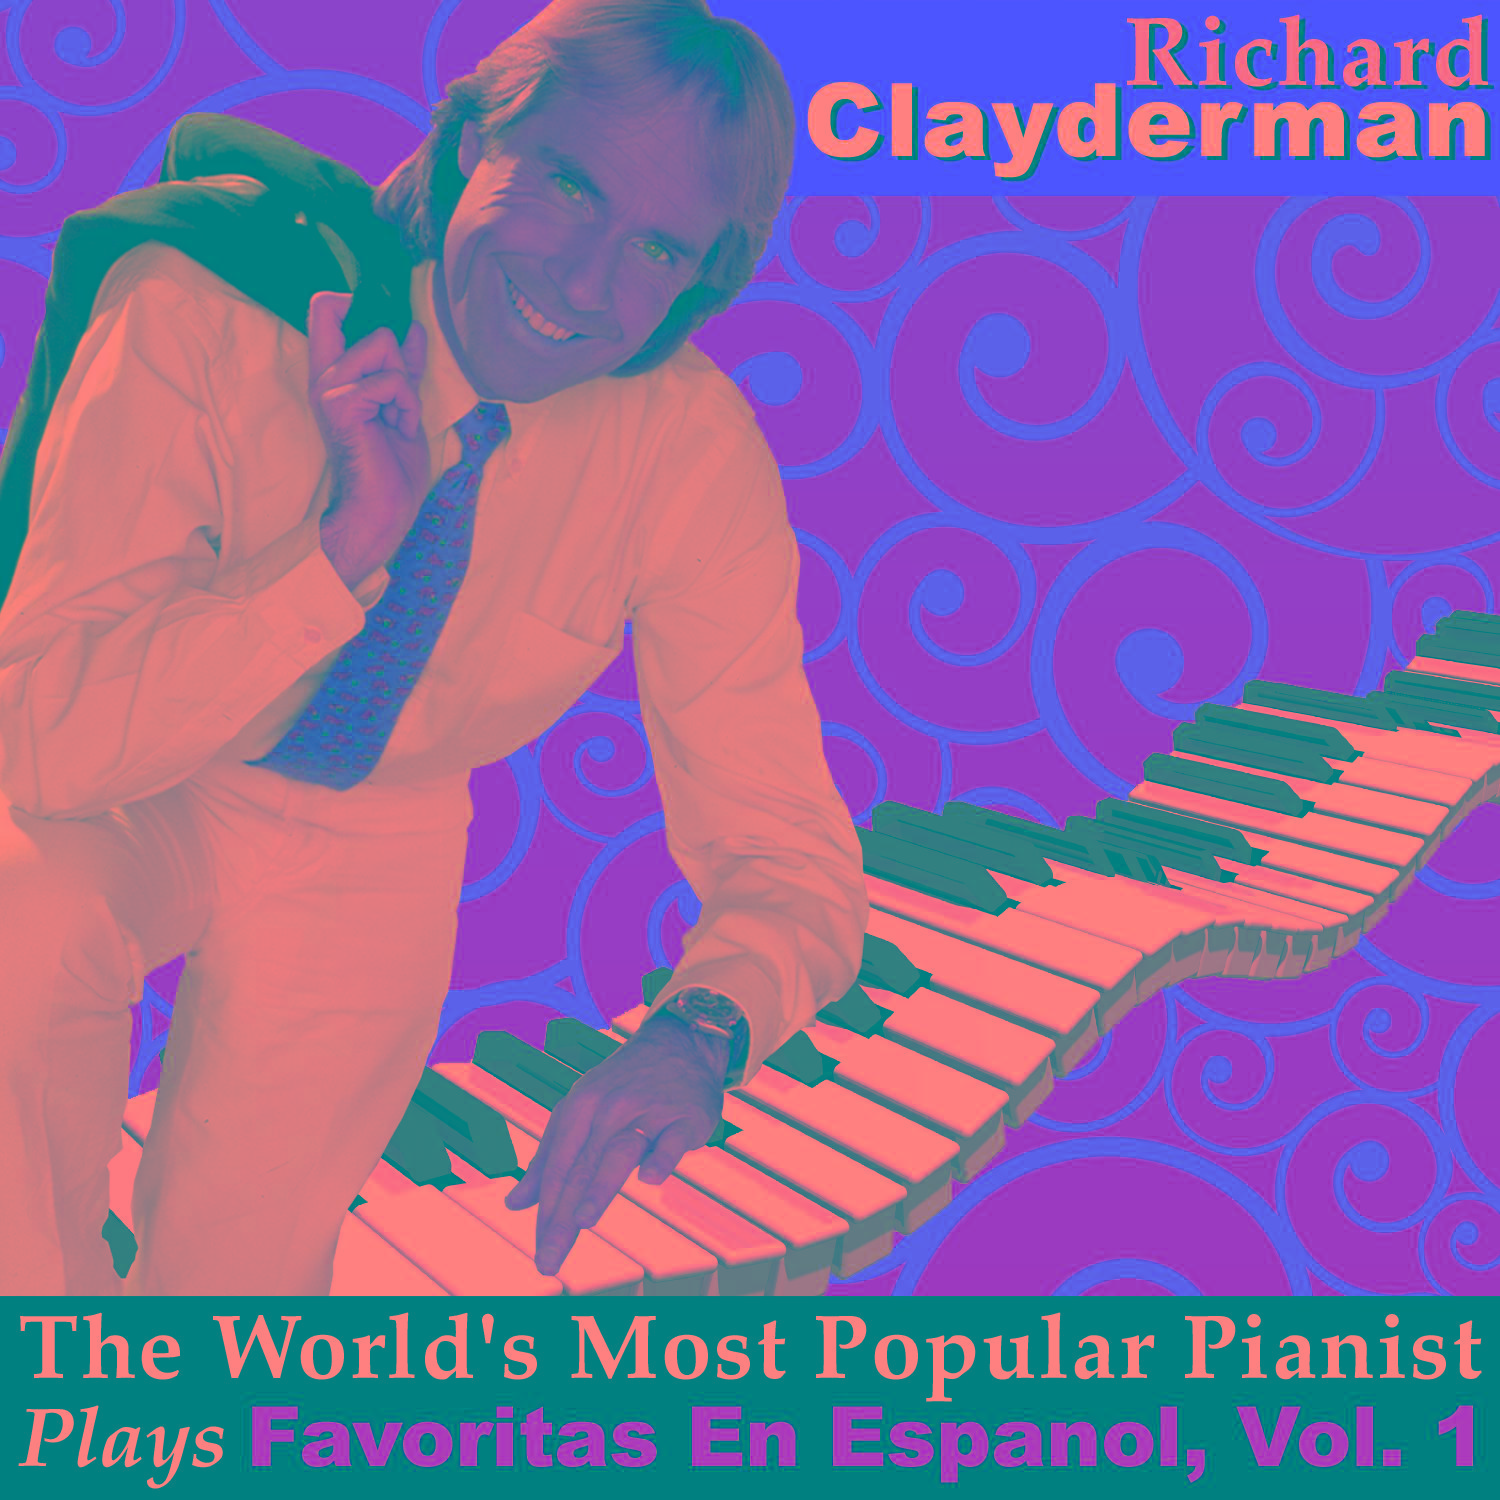 The World's Most Popular Pianist Plays Favoritas En Espanol, Vol. 1